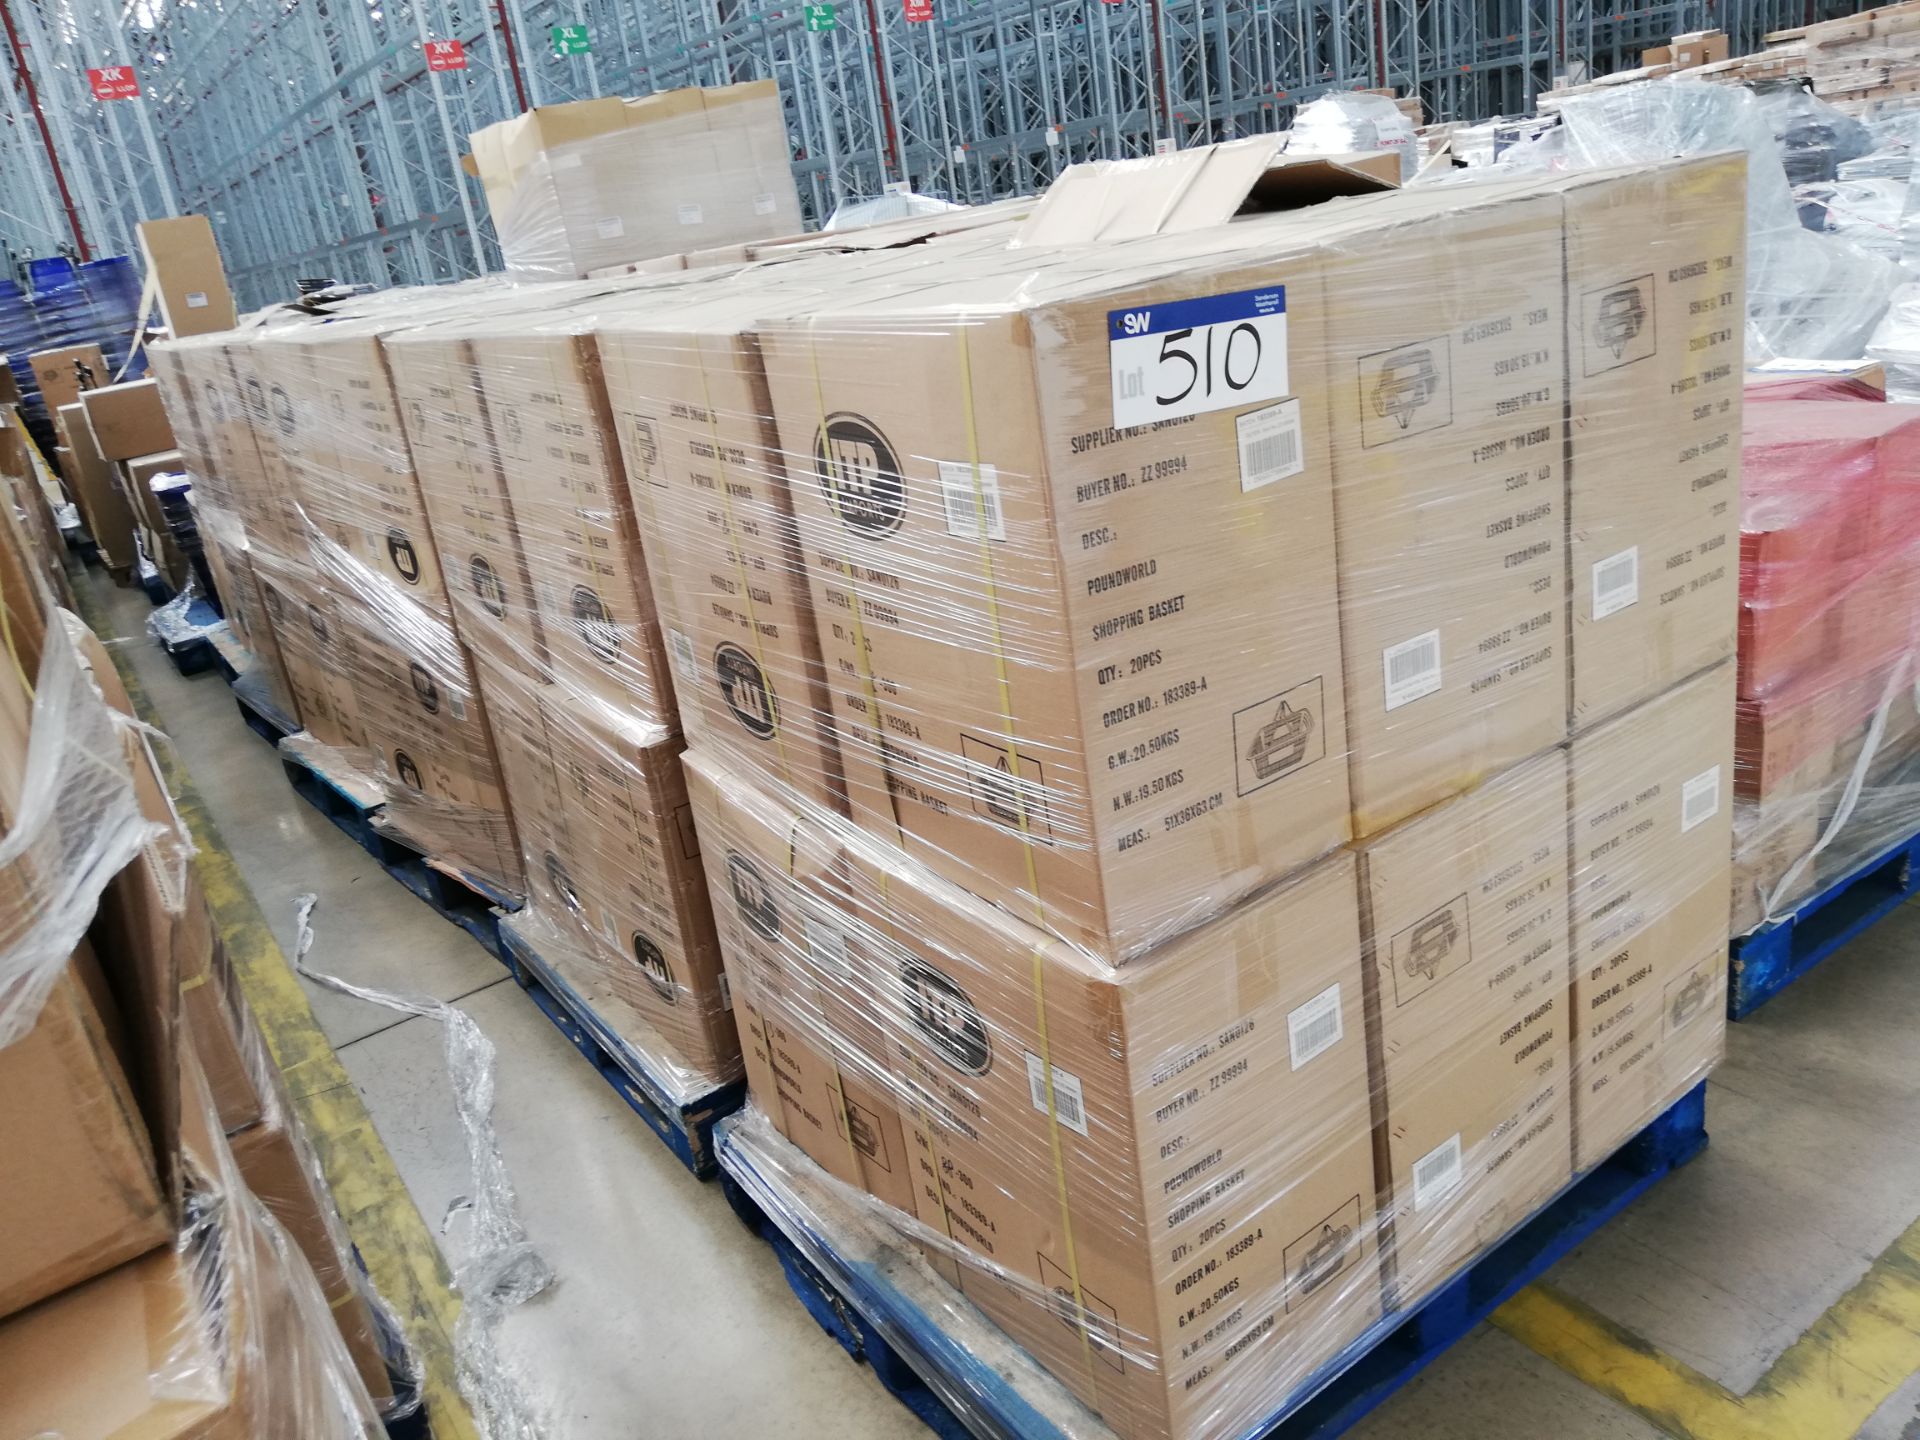 1,320 x ITP Poundworld Shopping Baskets (Boxed) on - Image 2 of 2